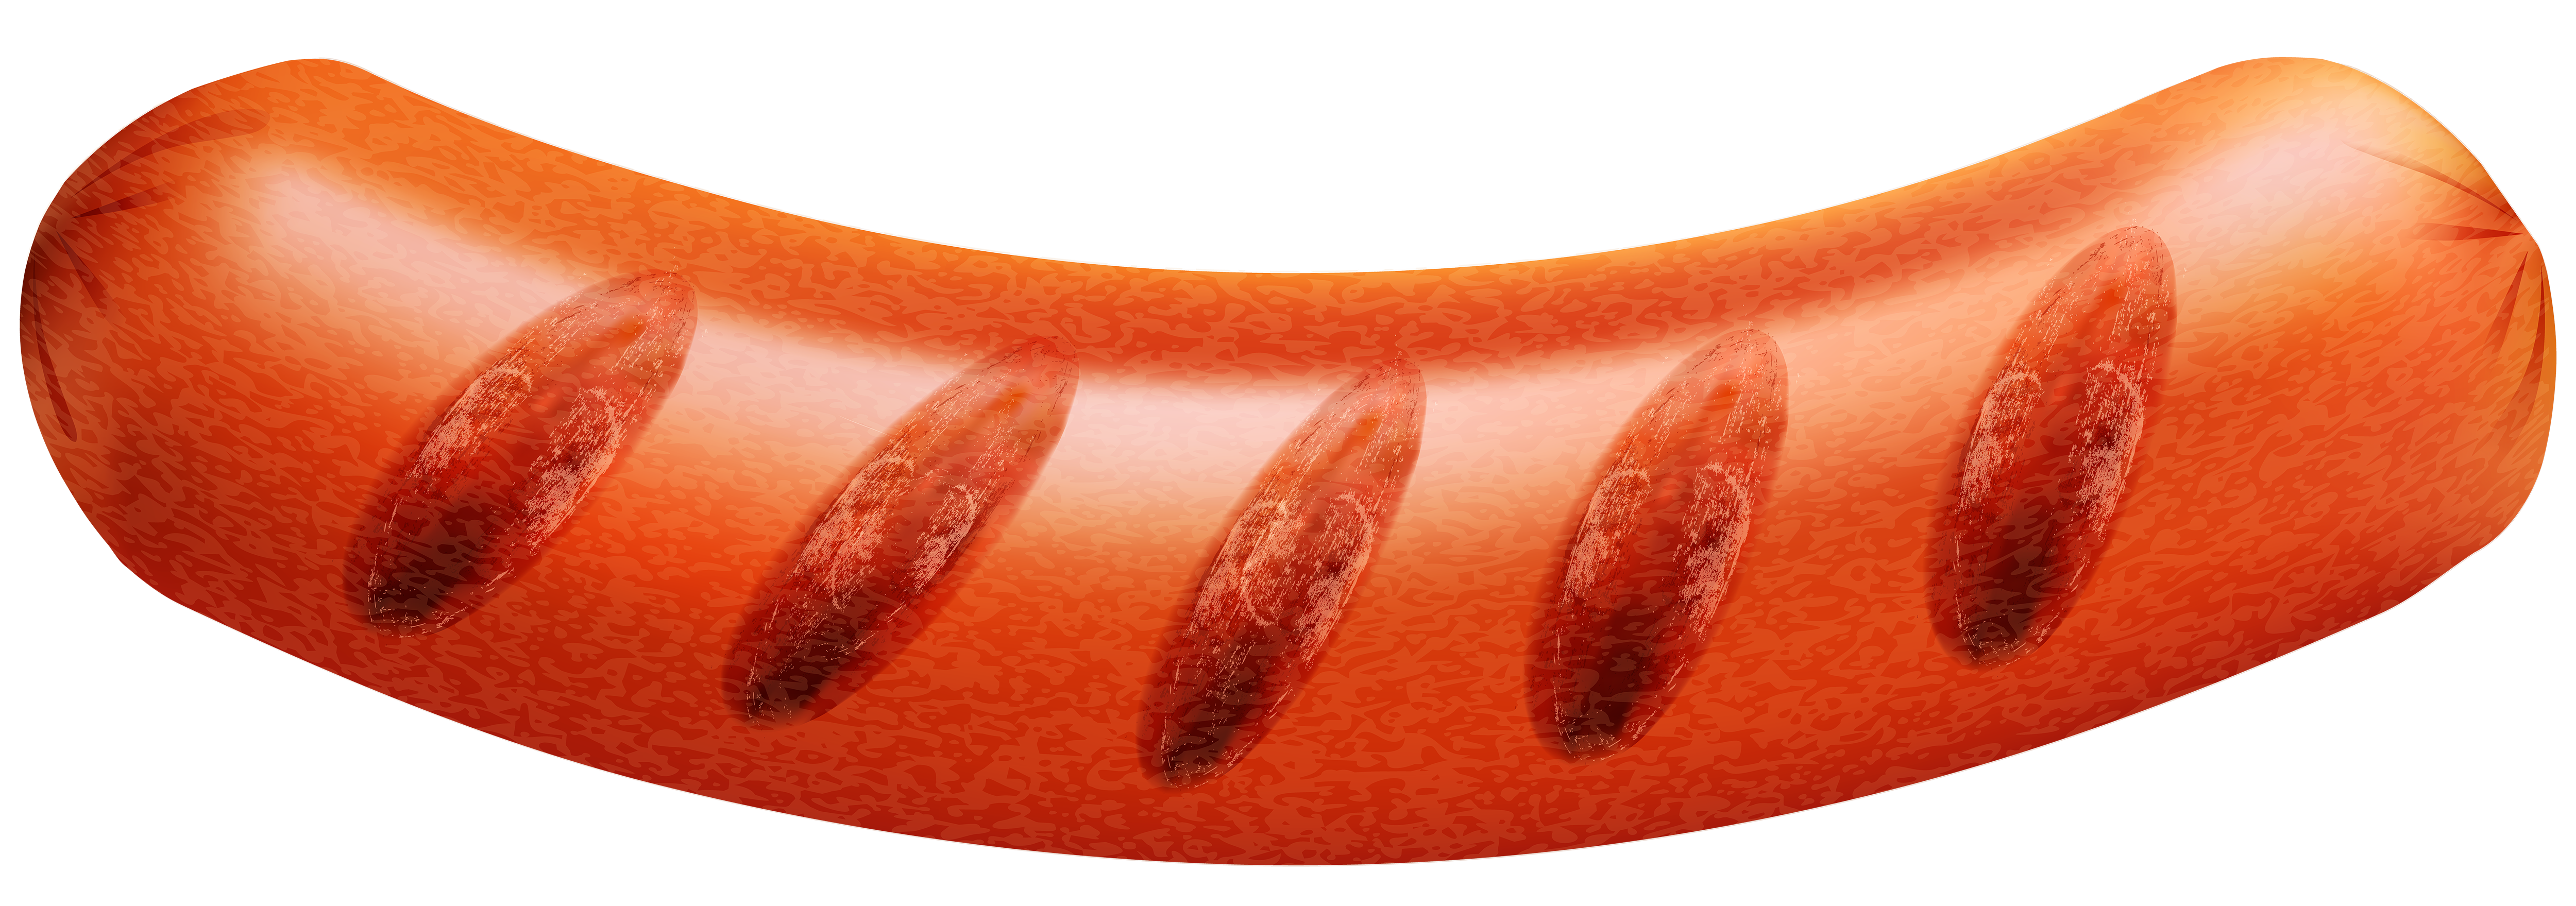 Grilled Sausage PNG Clip Art.